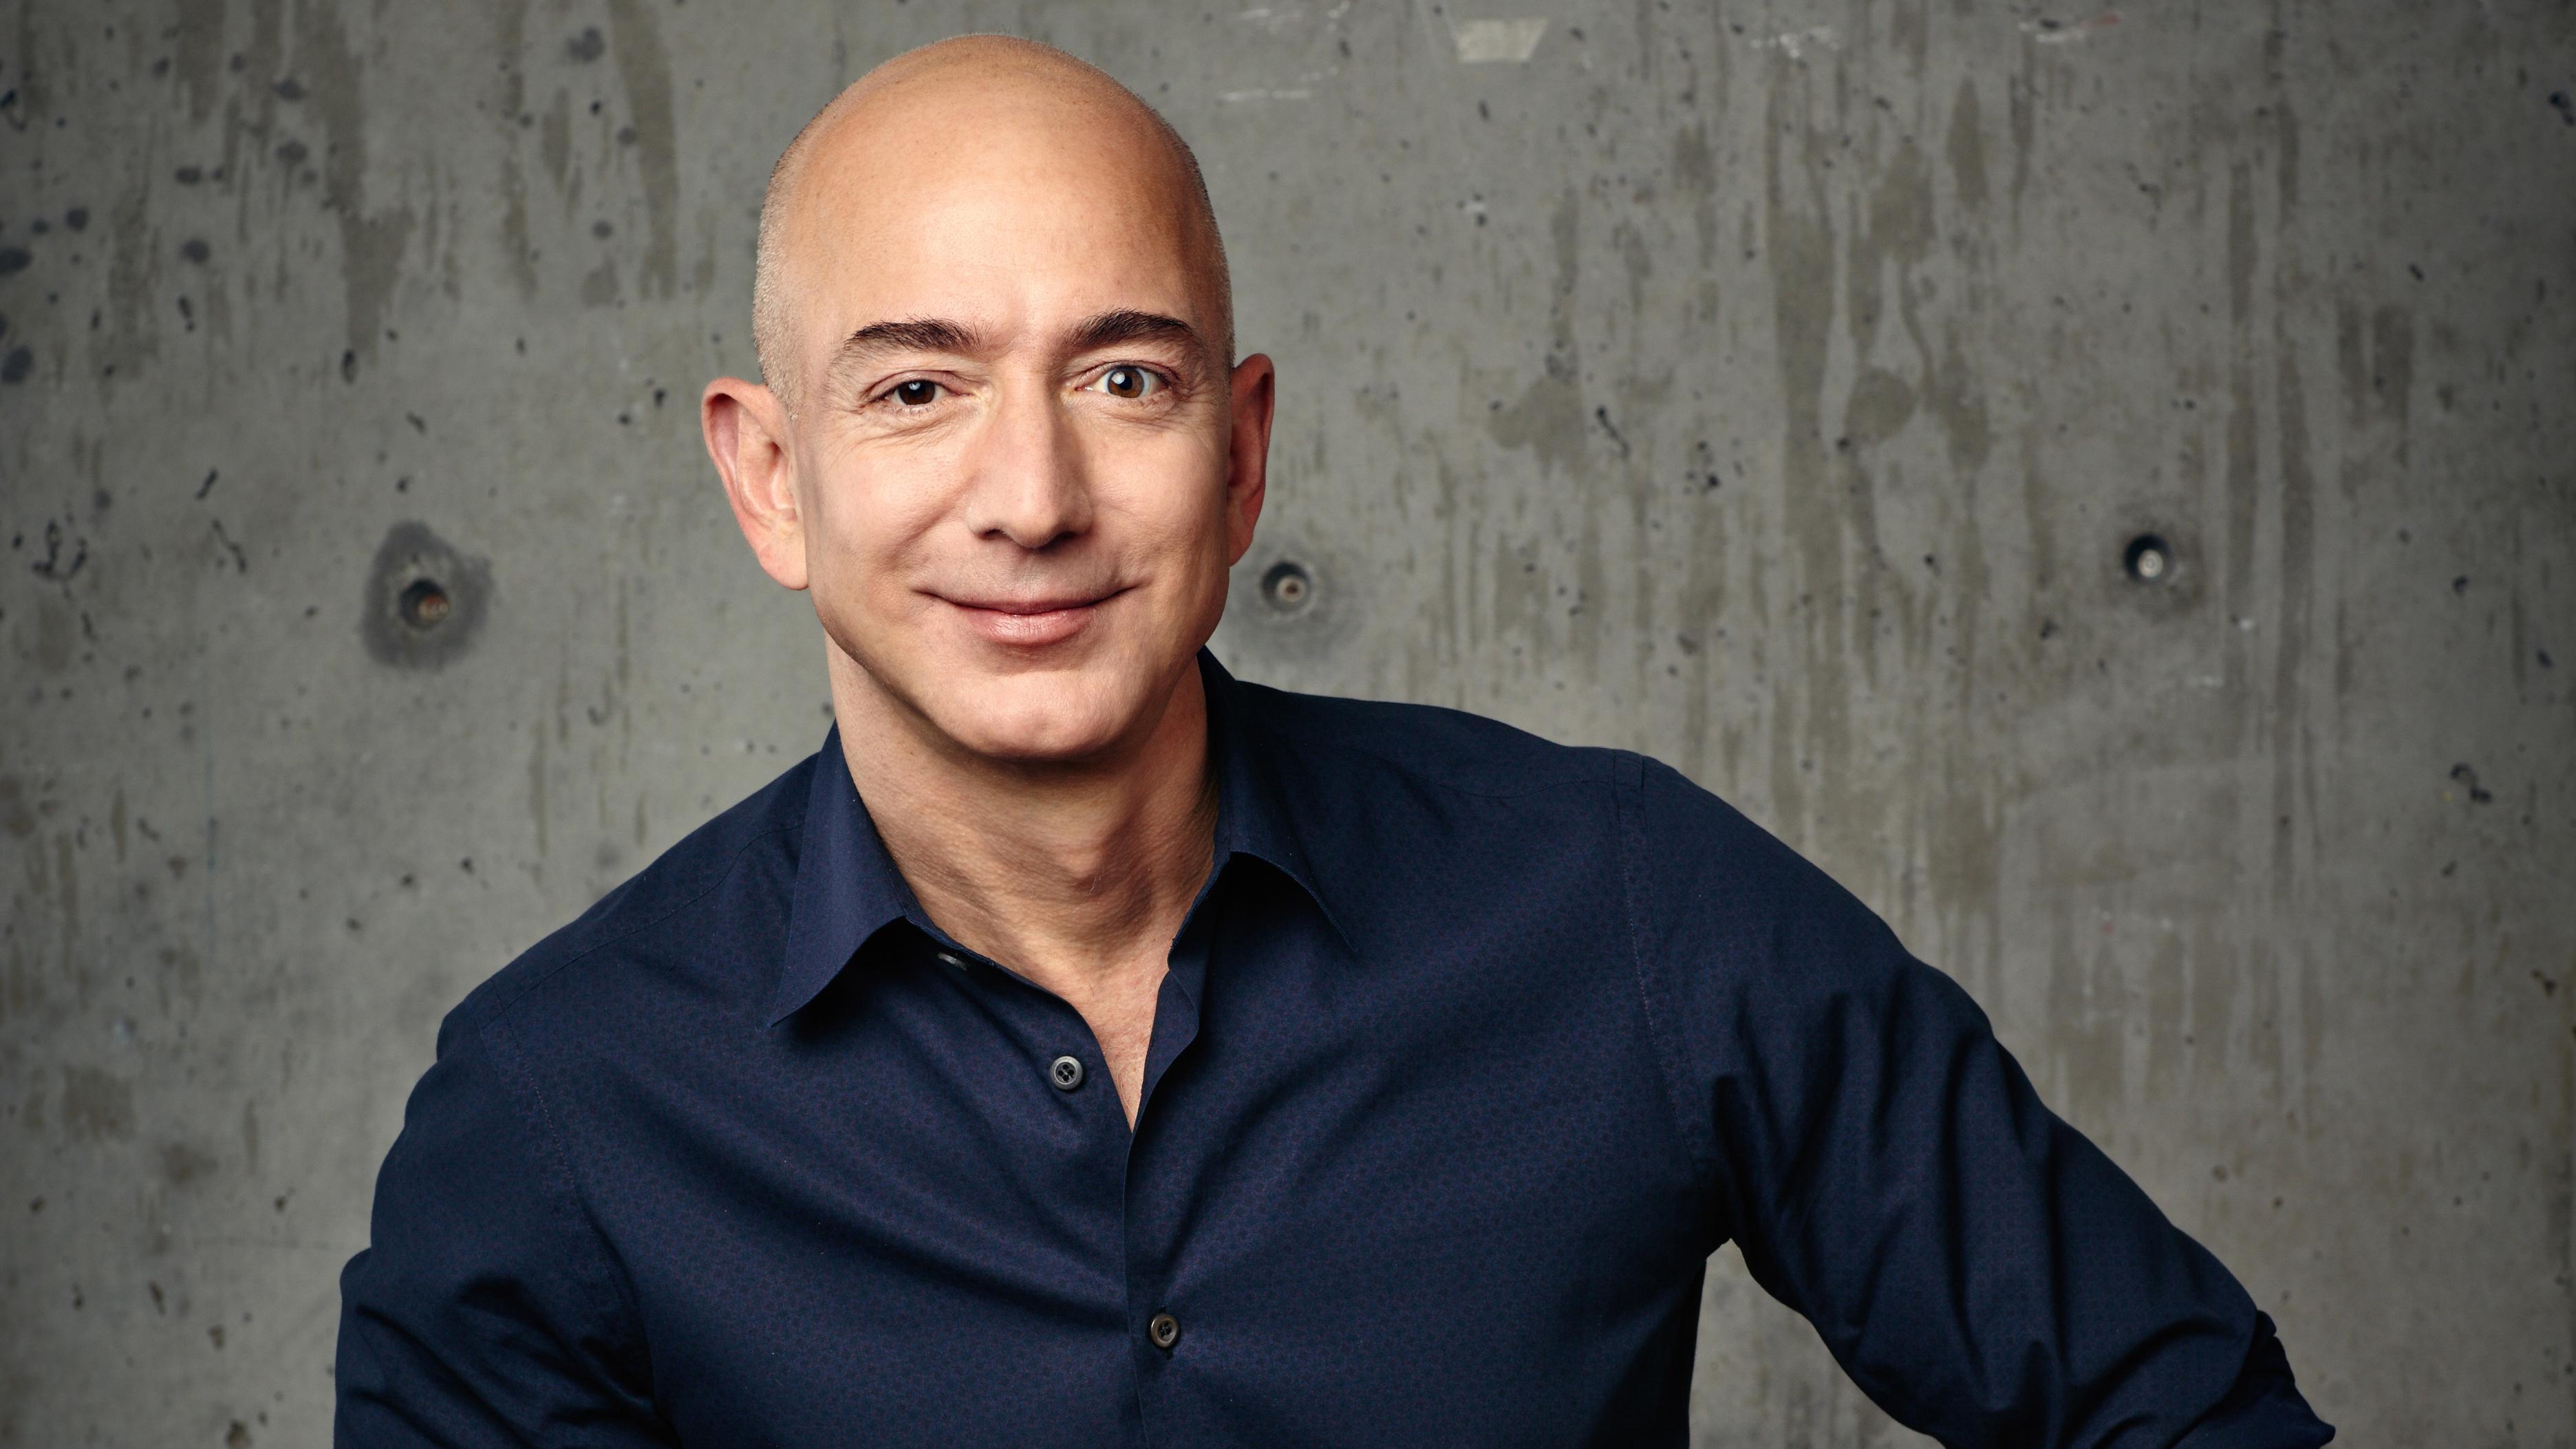 Jeff Bezos, HD Celebrities, 4k Wallpaper, Image, Background